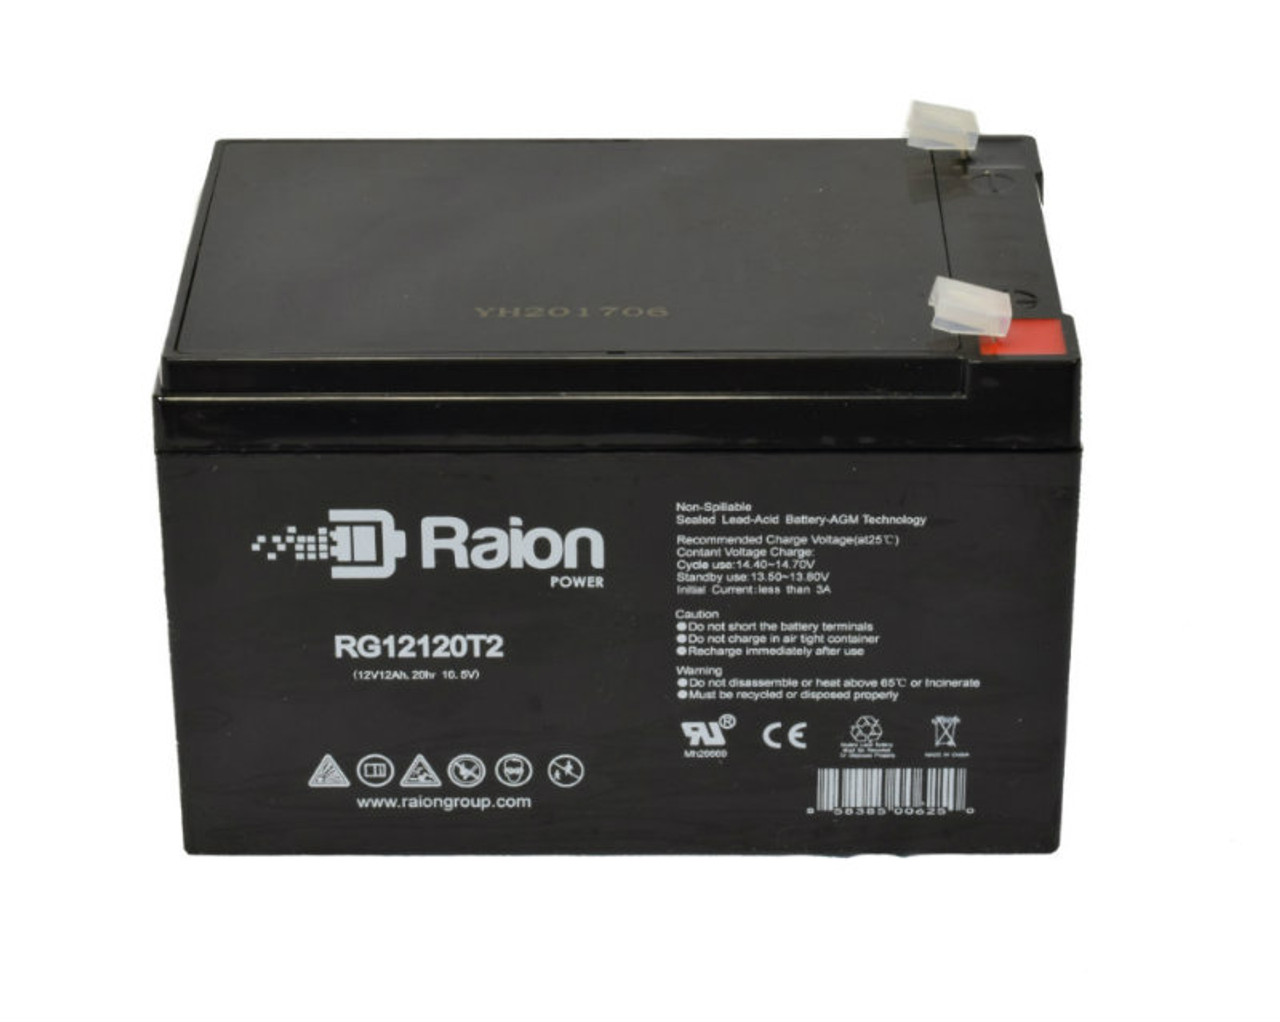 Raion Power RG12120T2 SLA Battery for X-treme X-150